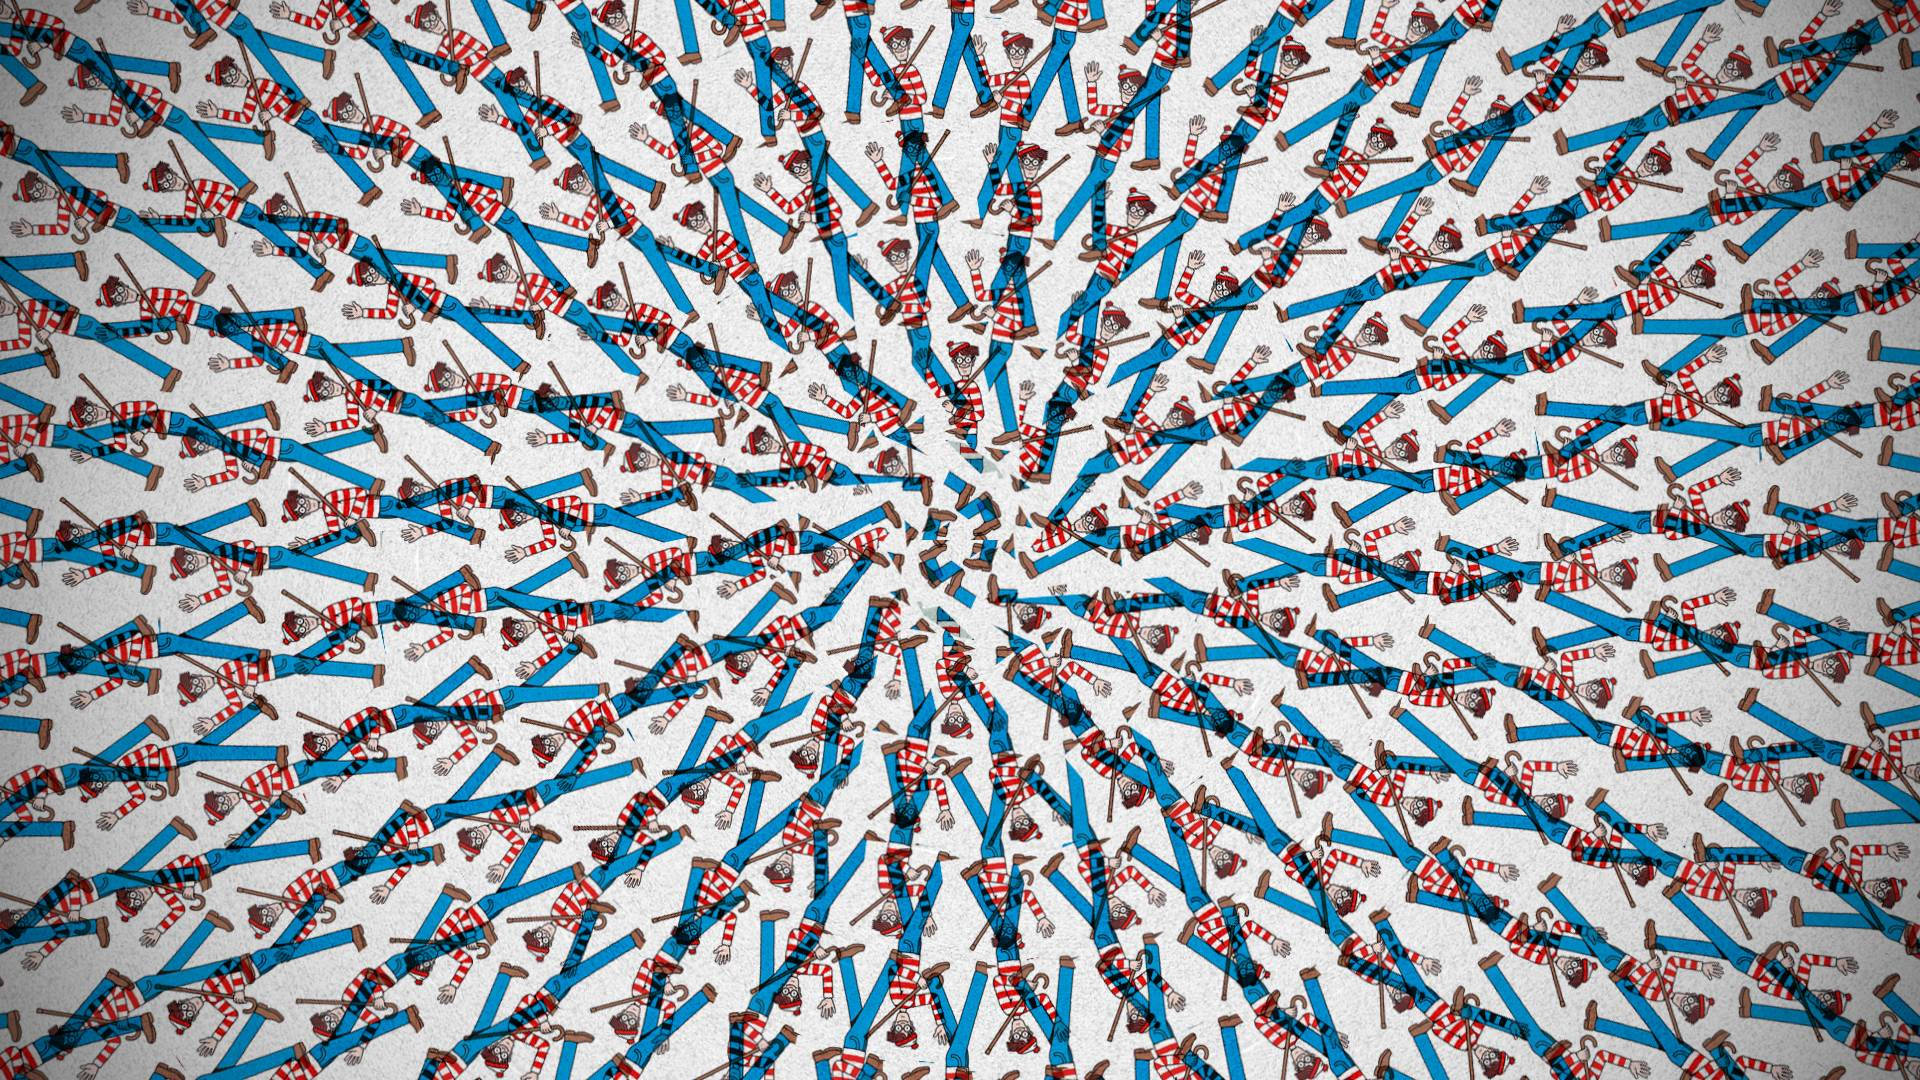 Top 999+ Wheres Waldo Wallpaper Full HD, 4K✅Free to Use